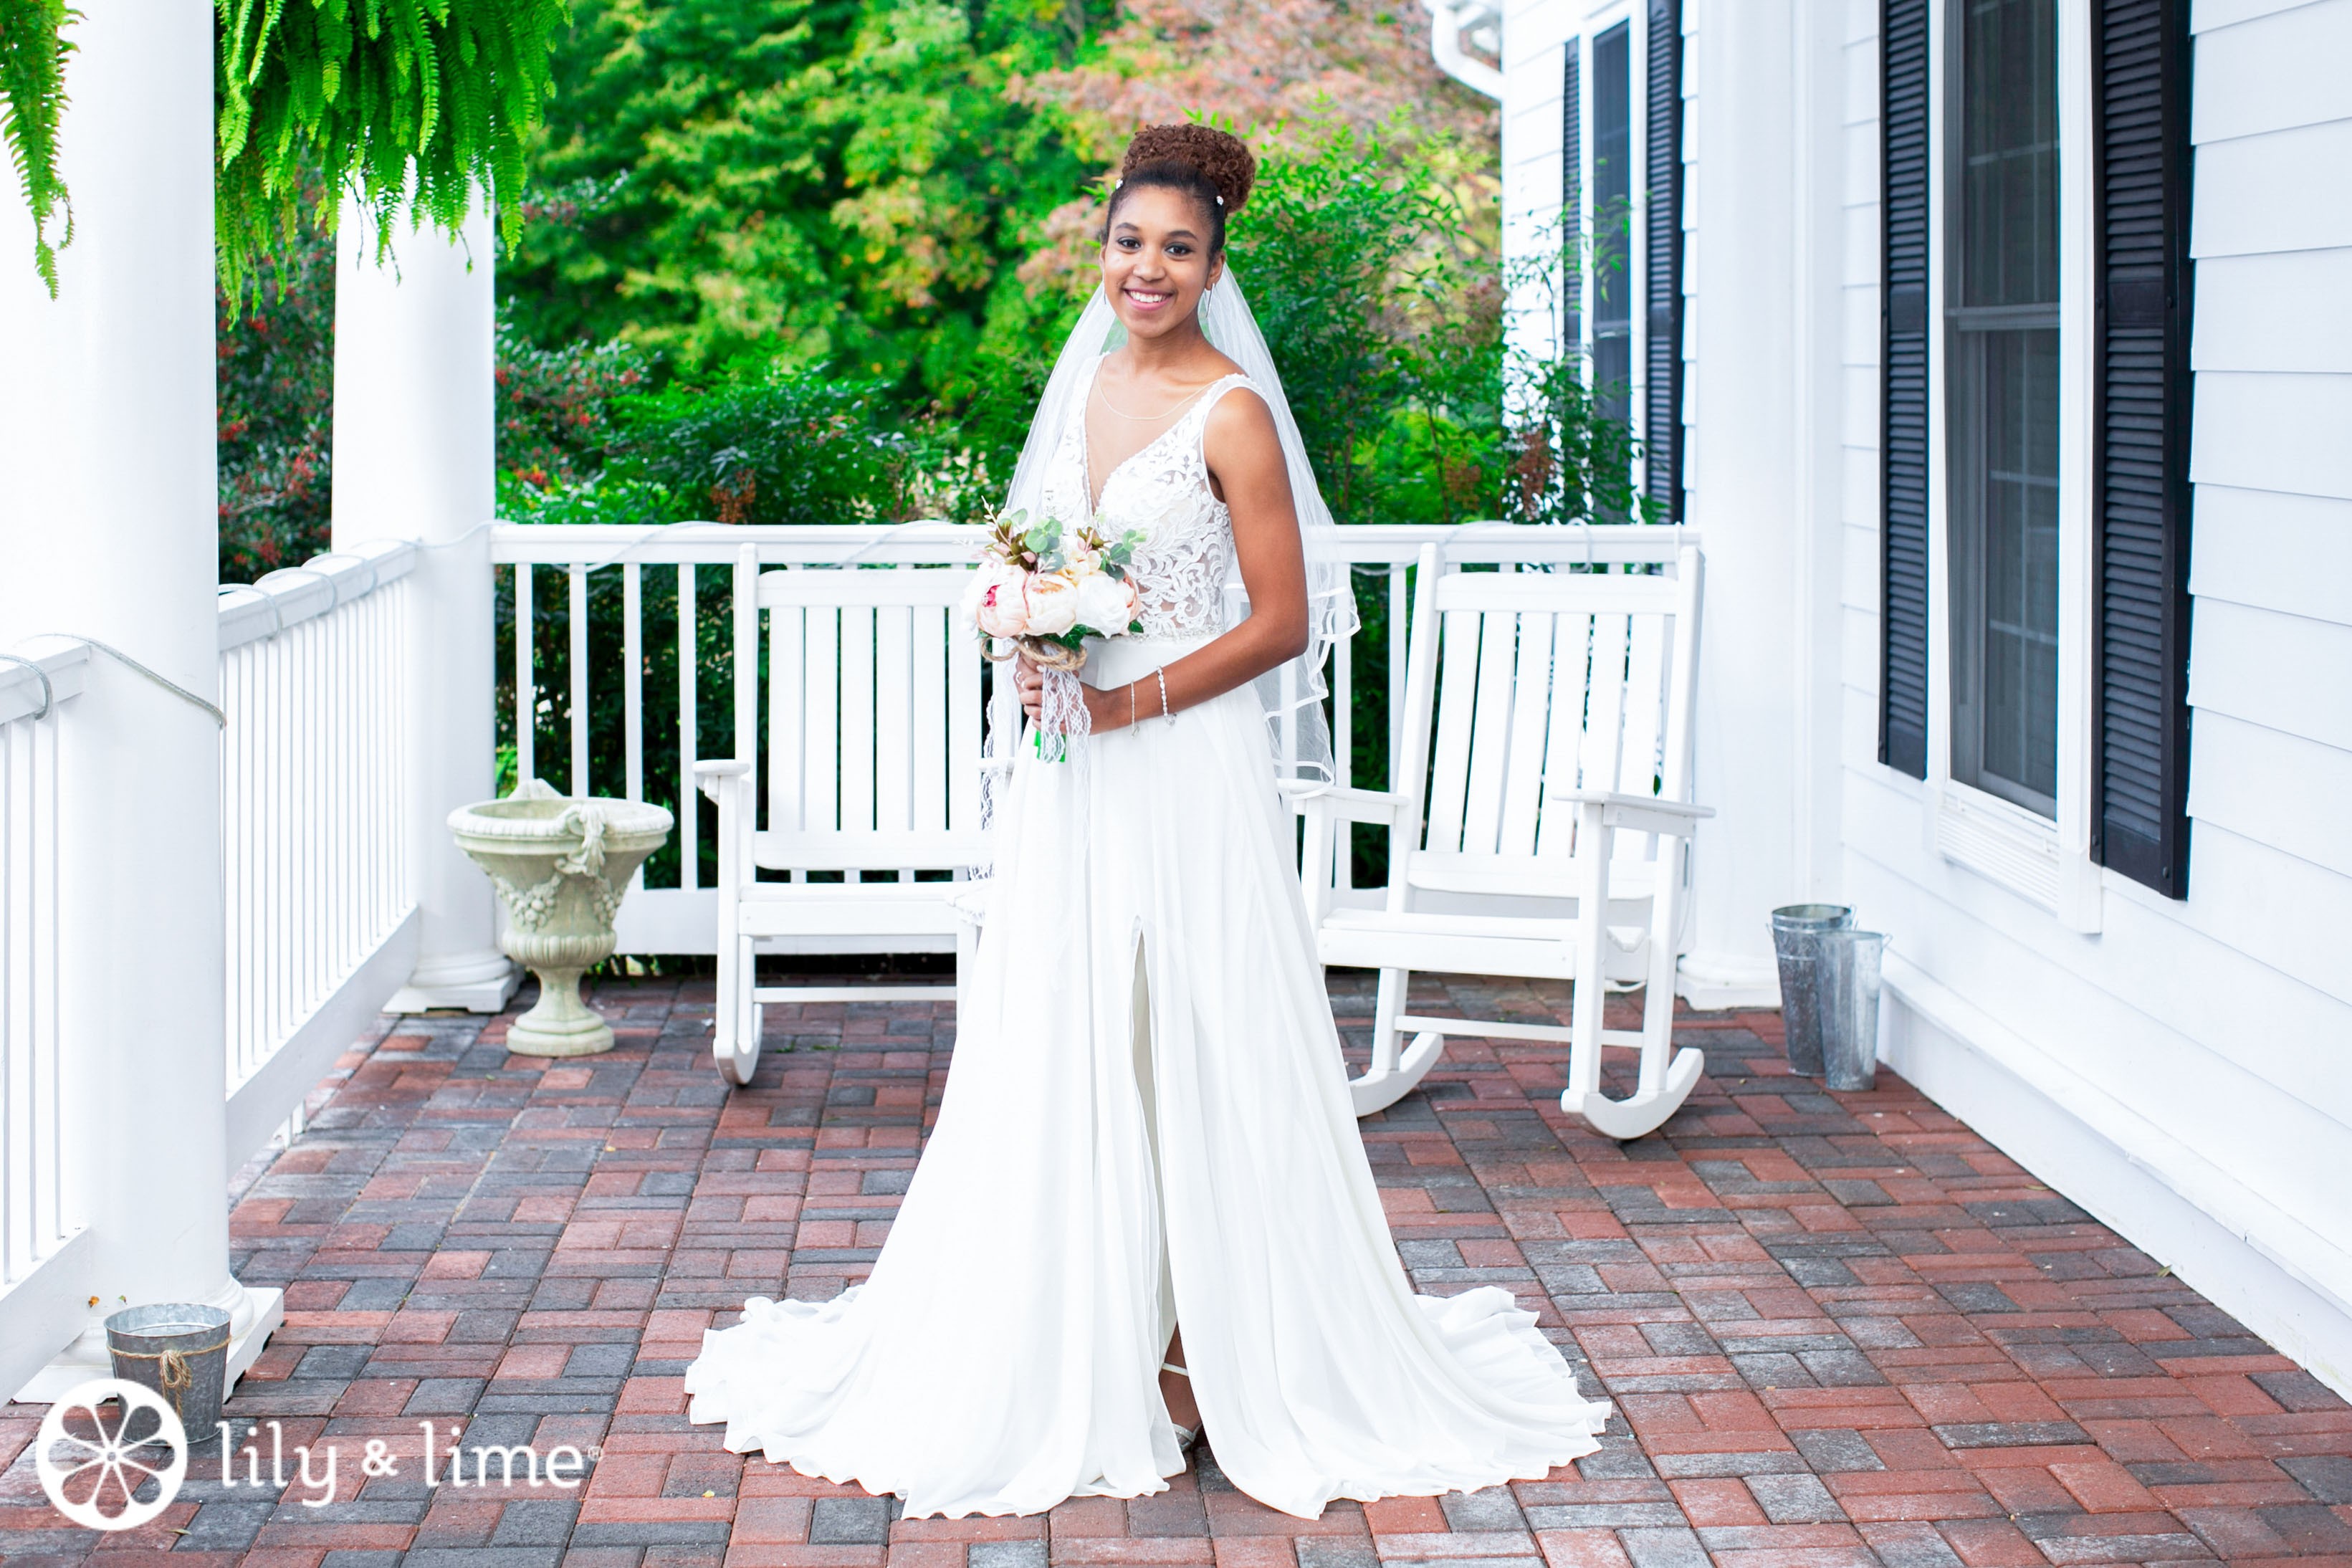 Casual Wedding Dresses For A Backyard Celebration - Modern Wedding